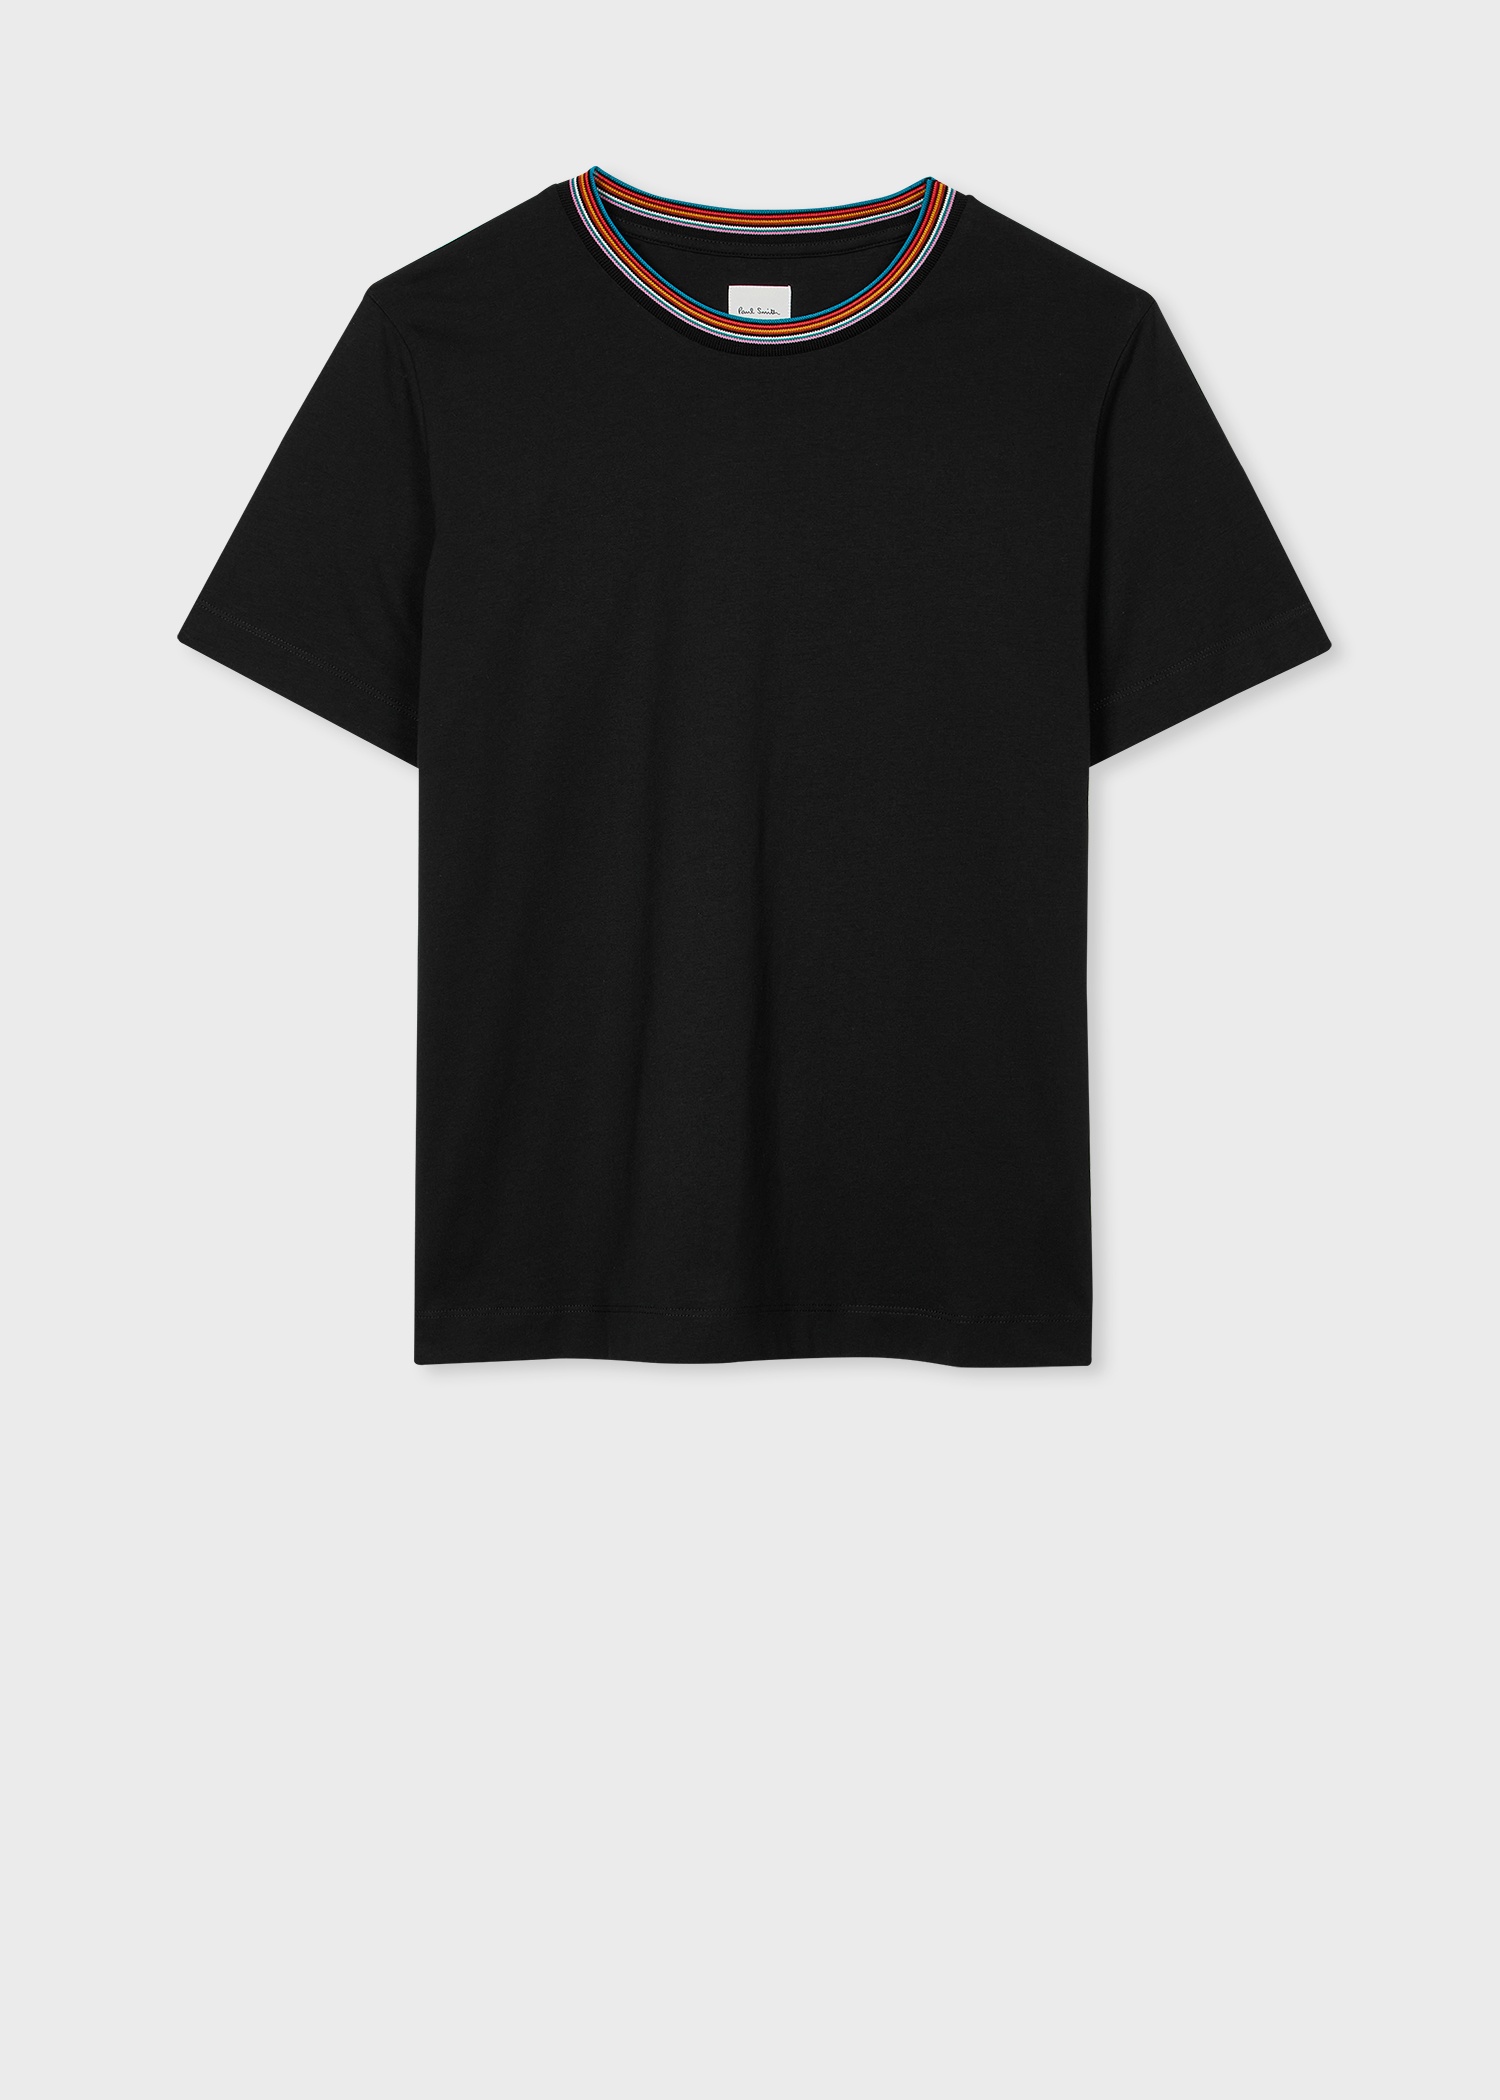 Women's Black 'Signature Stripe' Crew Neck T-Shirt - 1